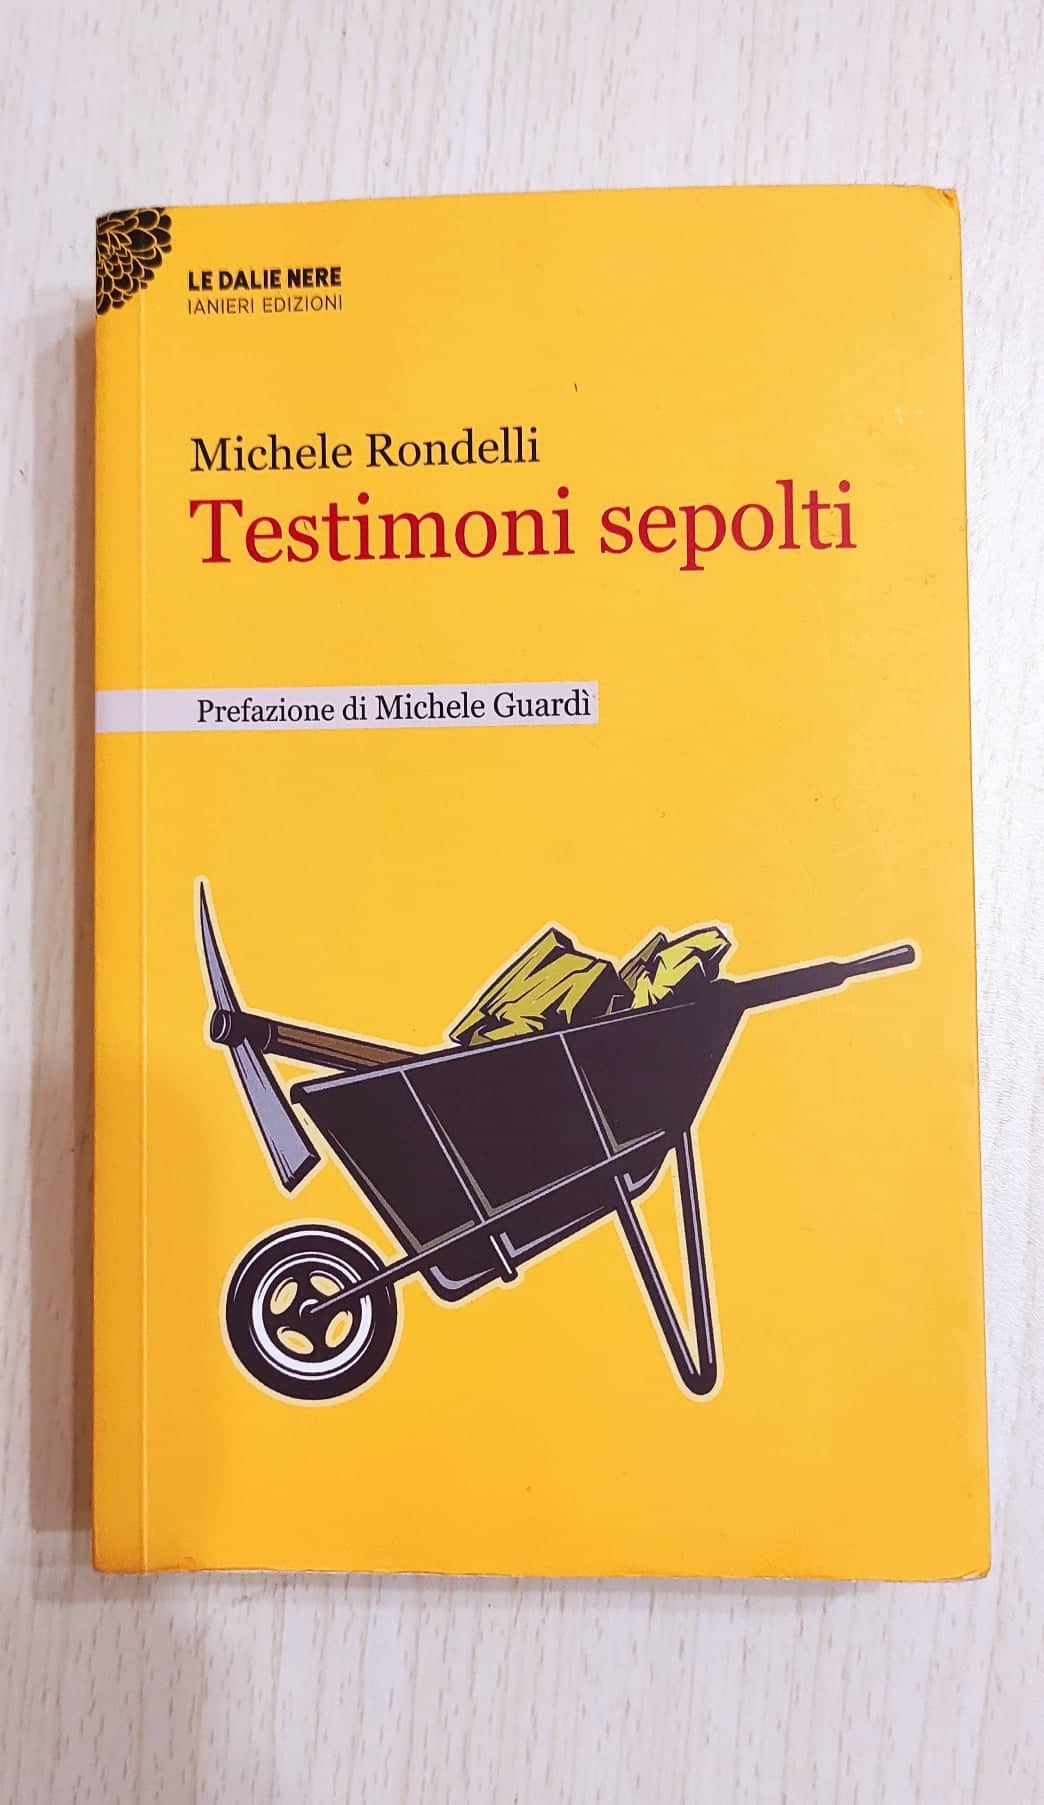 “Testimoni sepolti” – Michele Rondelli